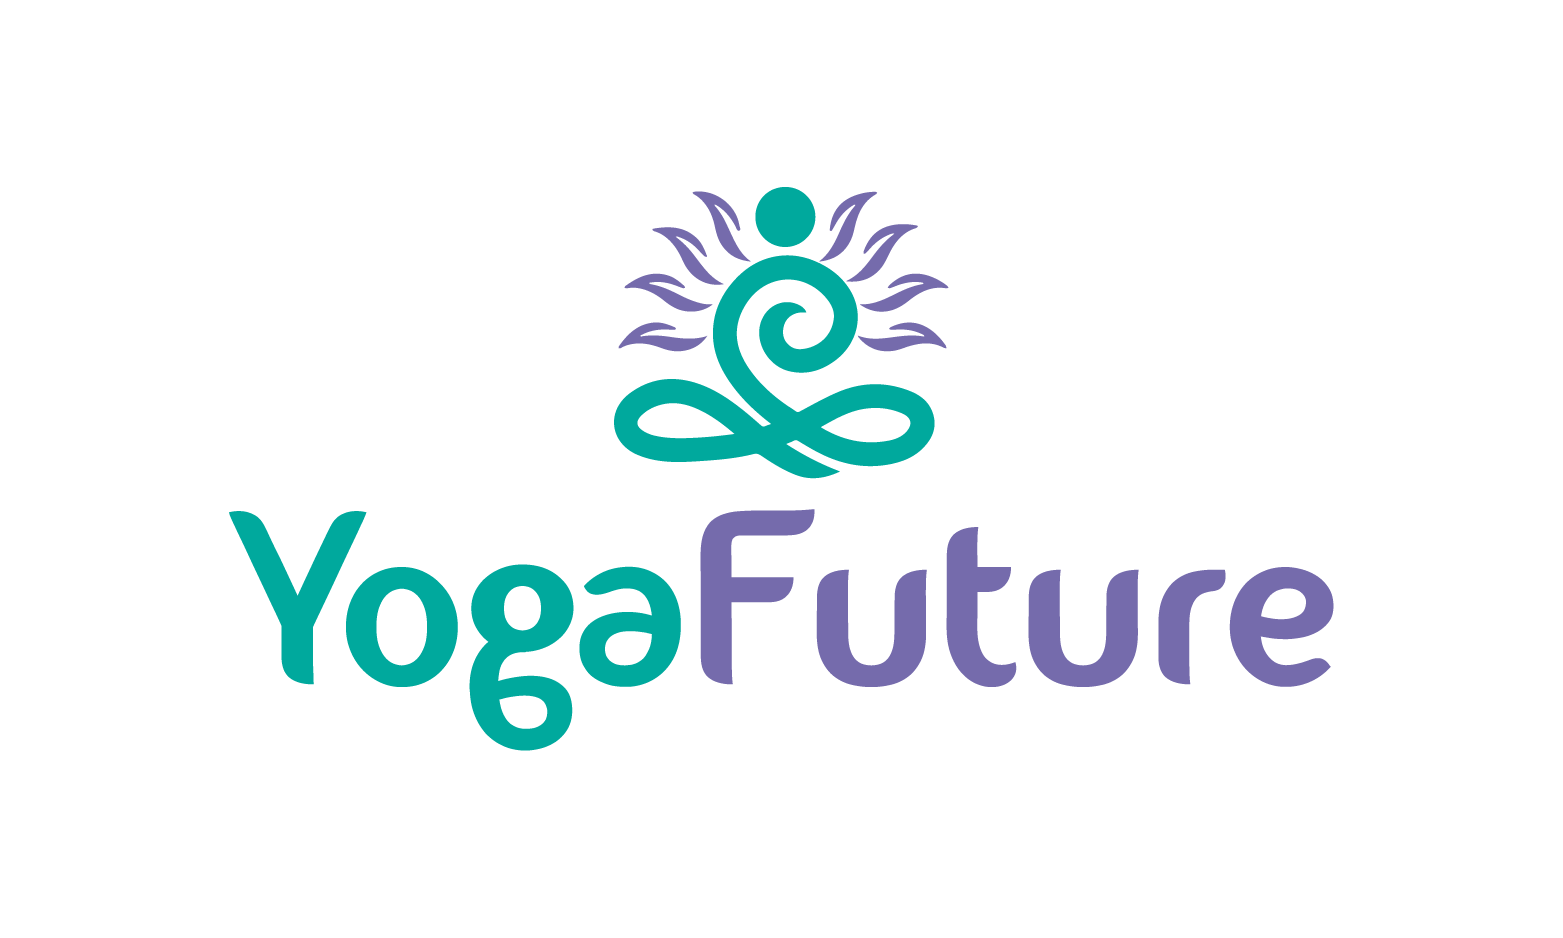 YogaFuture.com - Creative brandable domain for sale